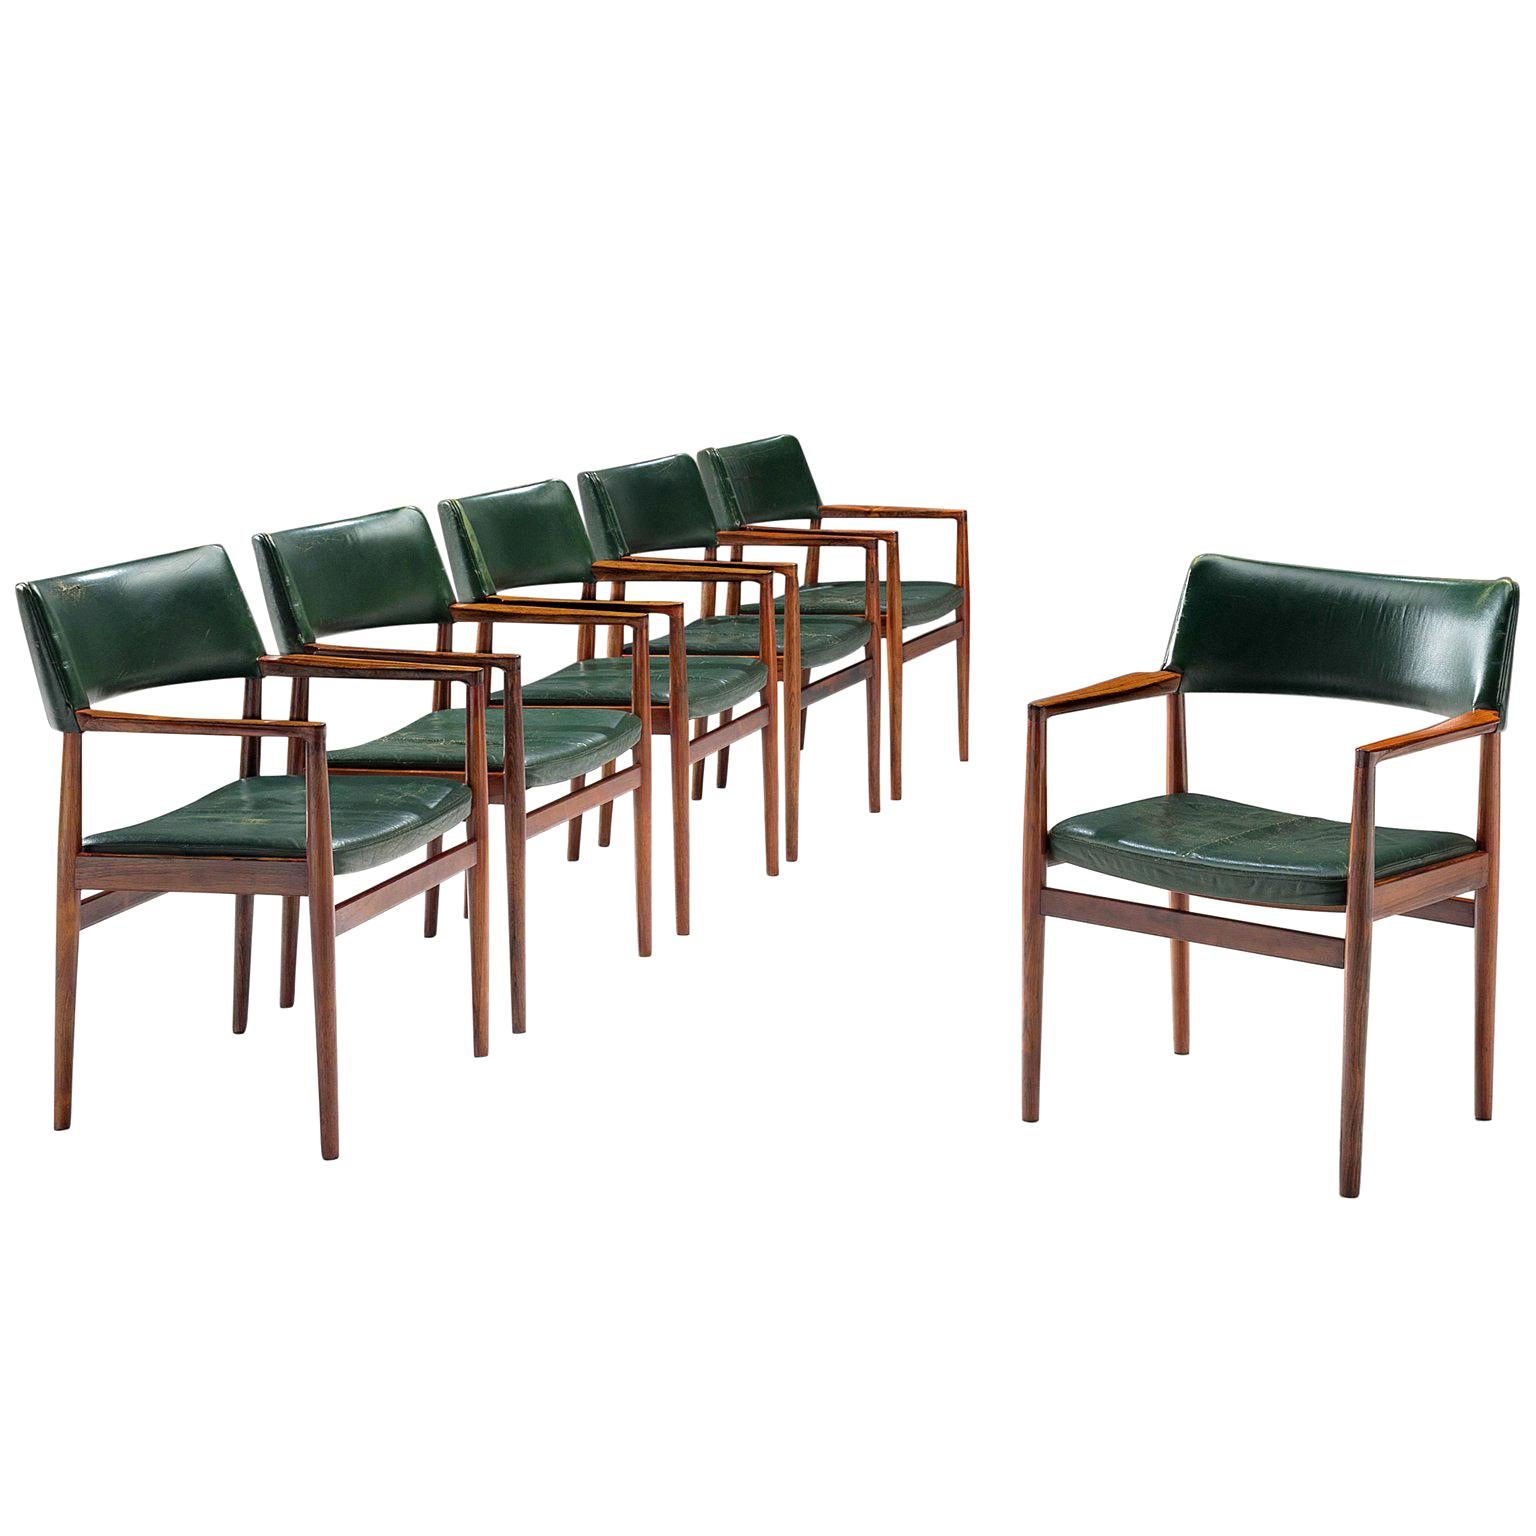 Bondo Gravesen Rosewood Armchairs in Original Green Leather